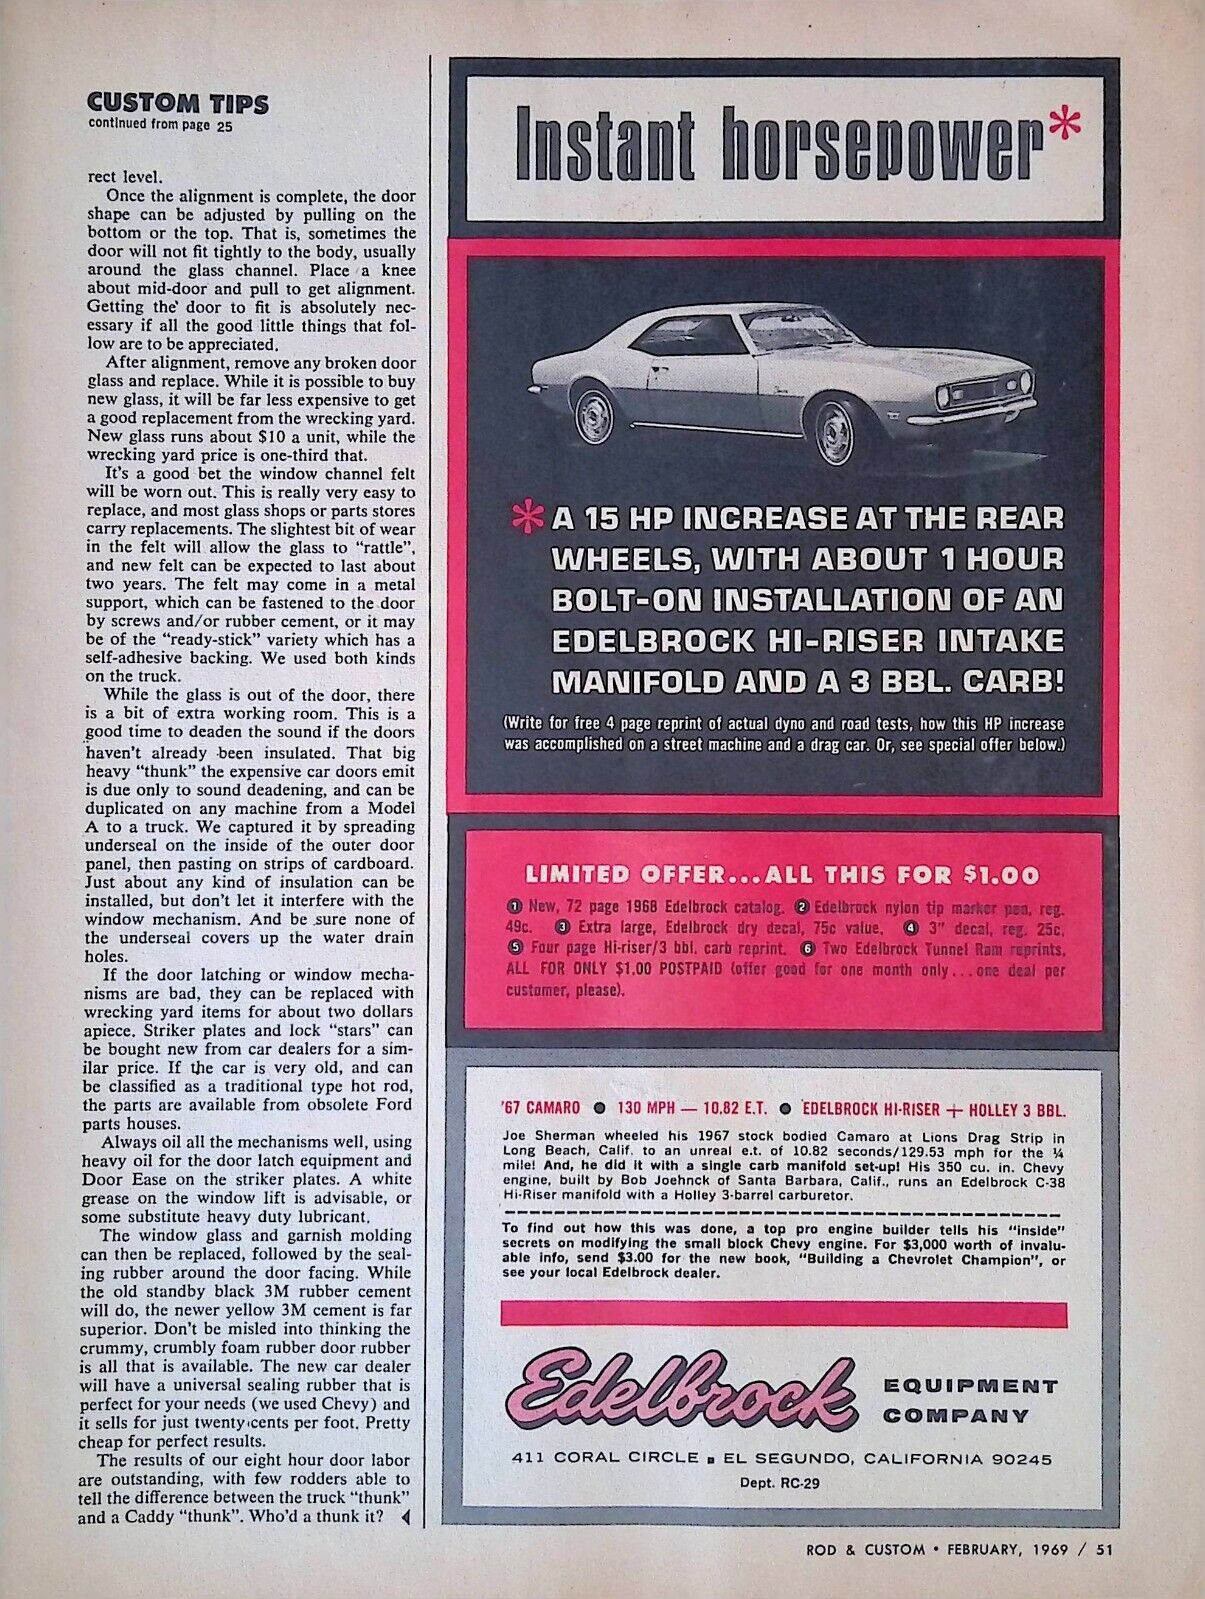 Edelbrock Equipment Company Print Ad Rod & Custom Magazine February 1969